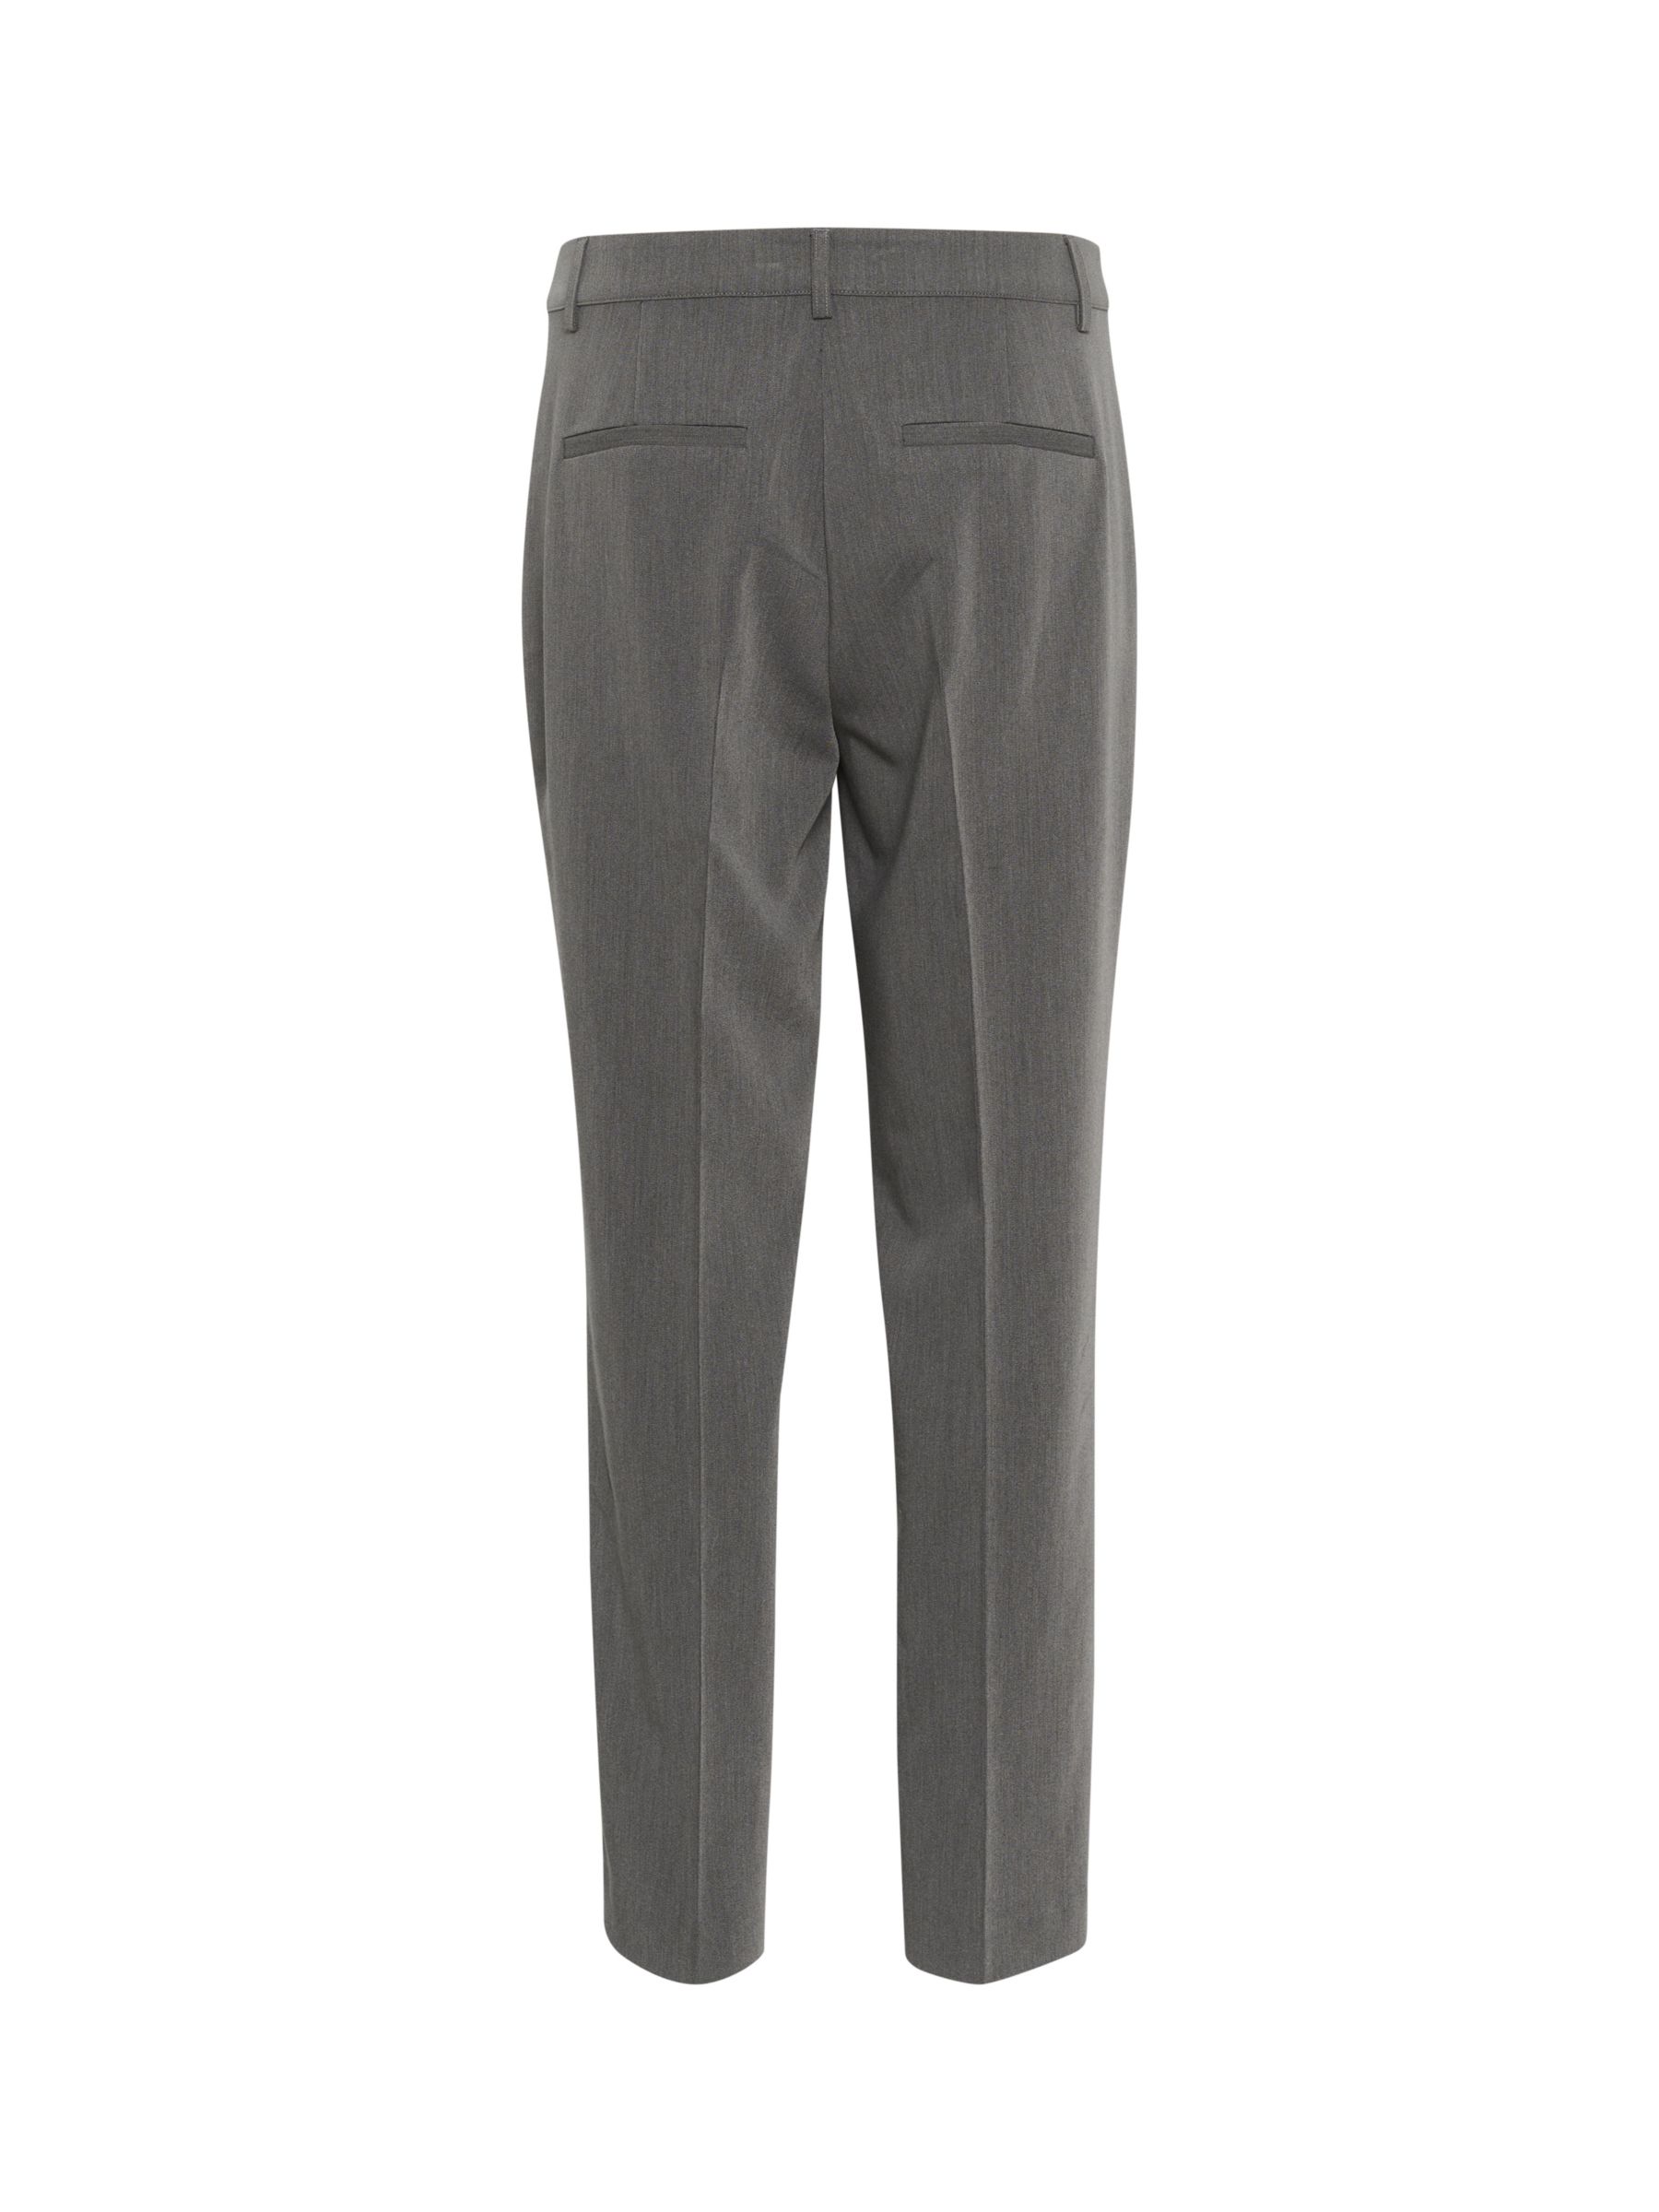 KAFFE Sakura Zip Trousers, Dark Grey Melange at John Lewis & Partners